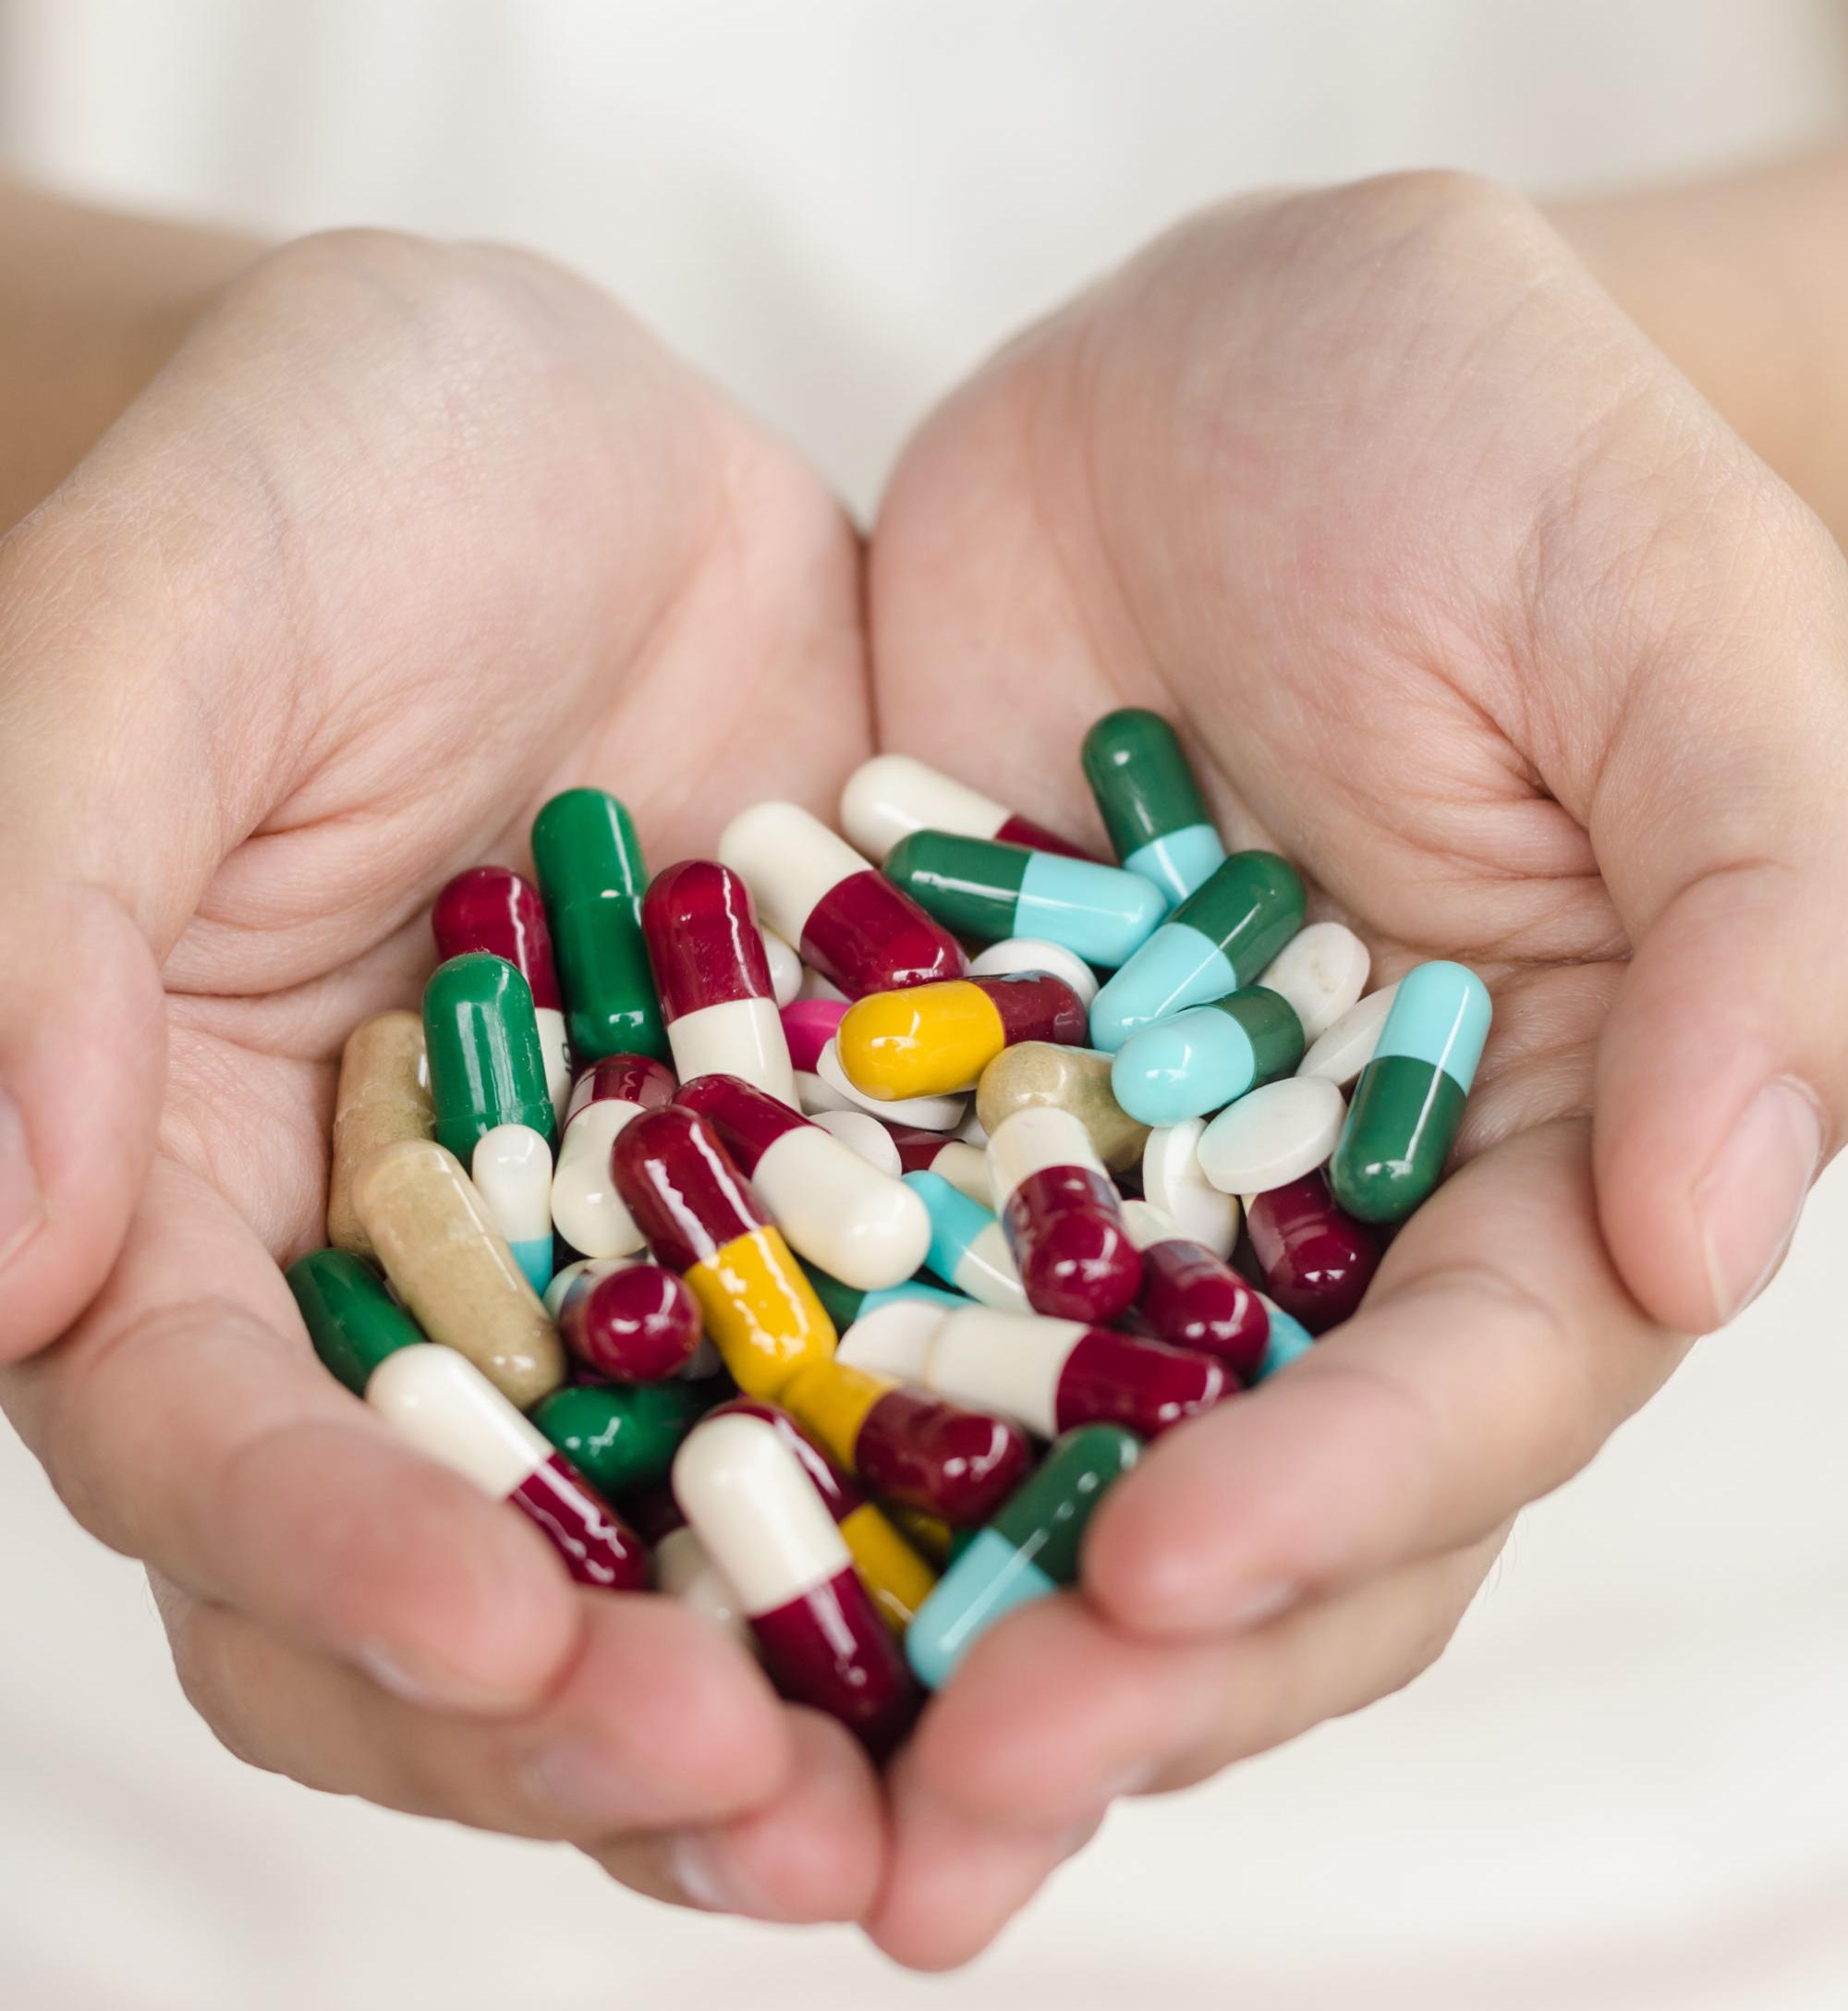 Holding Various Medicines Pills Drugs